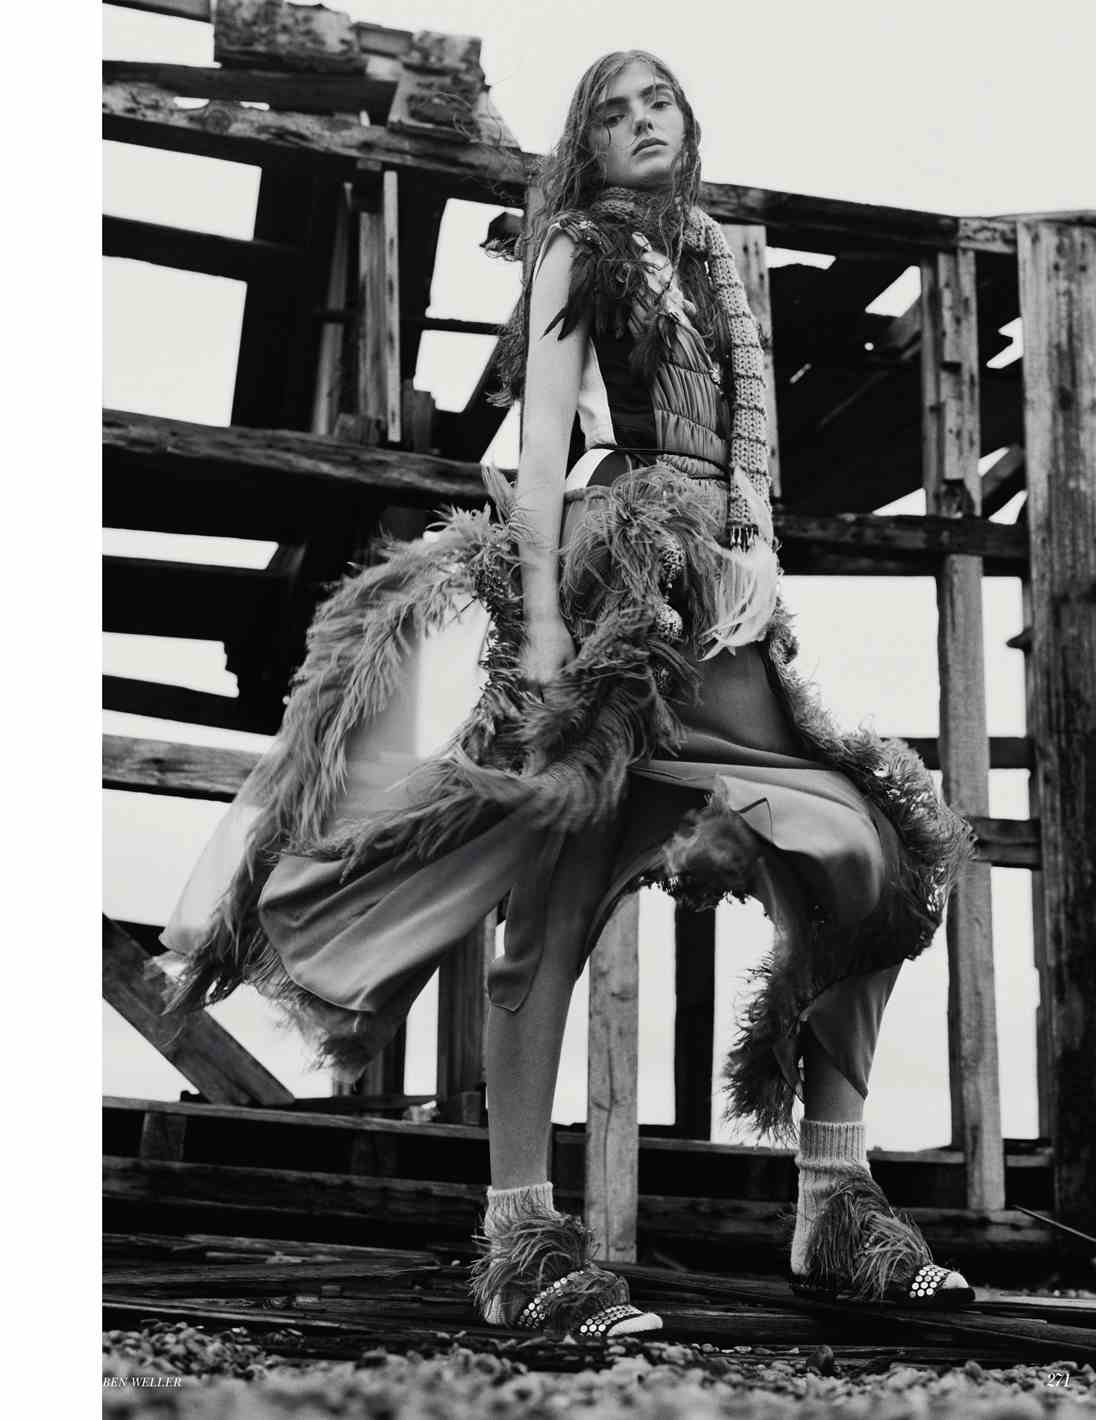 VOGUE RUSSIA - September 2017
Photographer: Ben Weller
Model: Federico Spinas and Skylar Tartz
Stylist: Margherita Moro
Location: UK